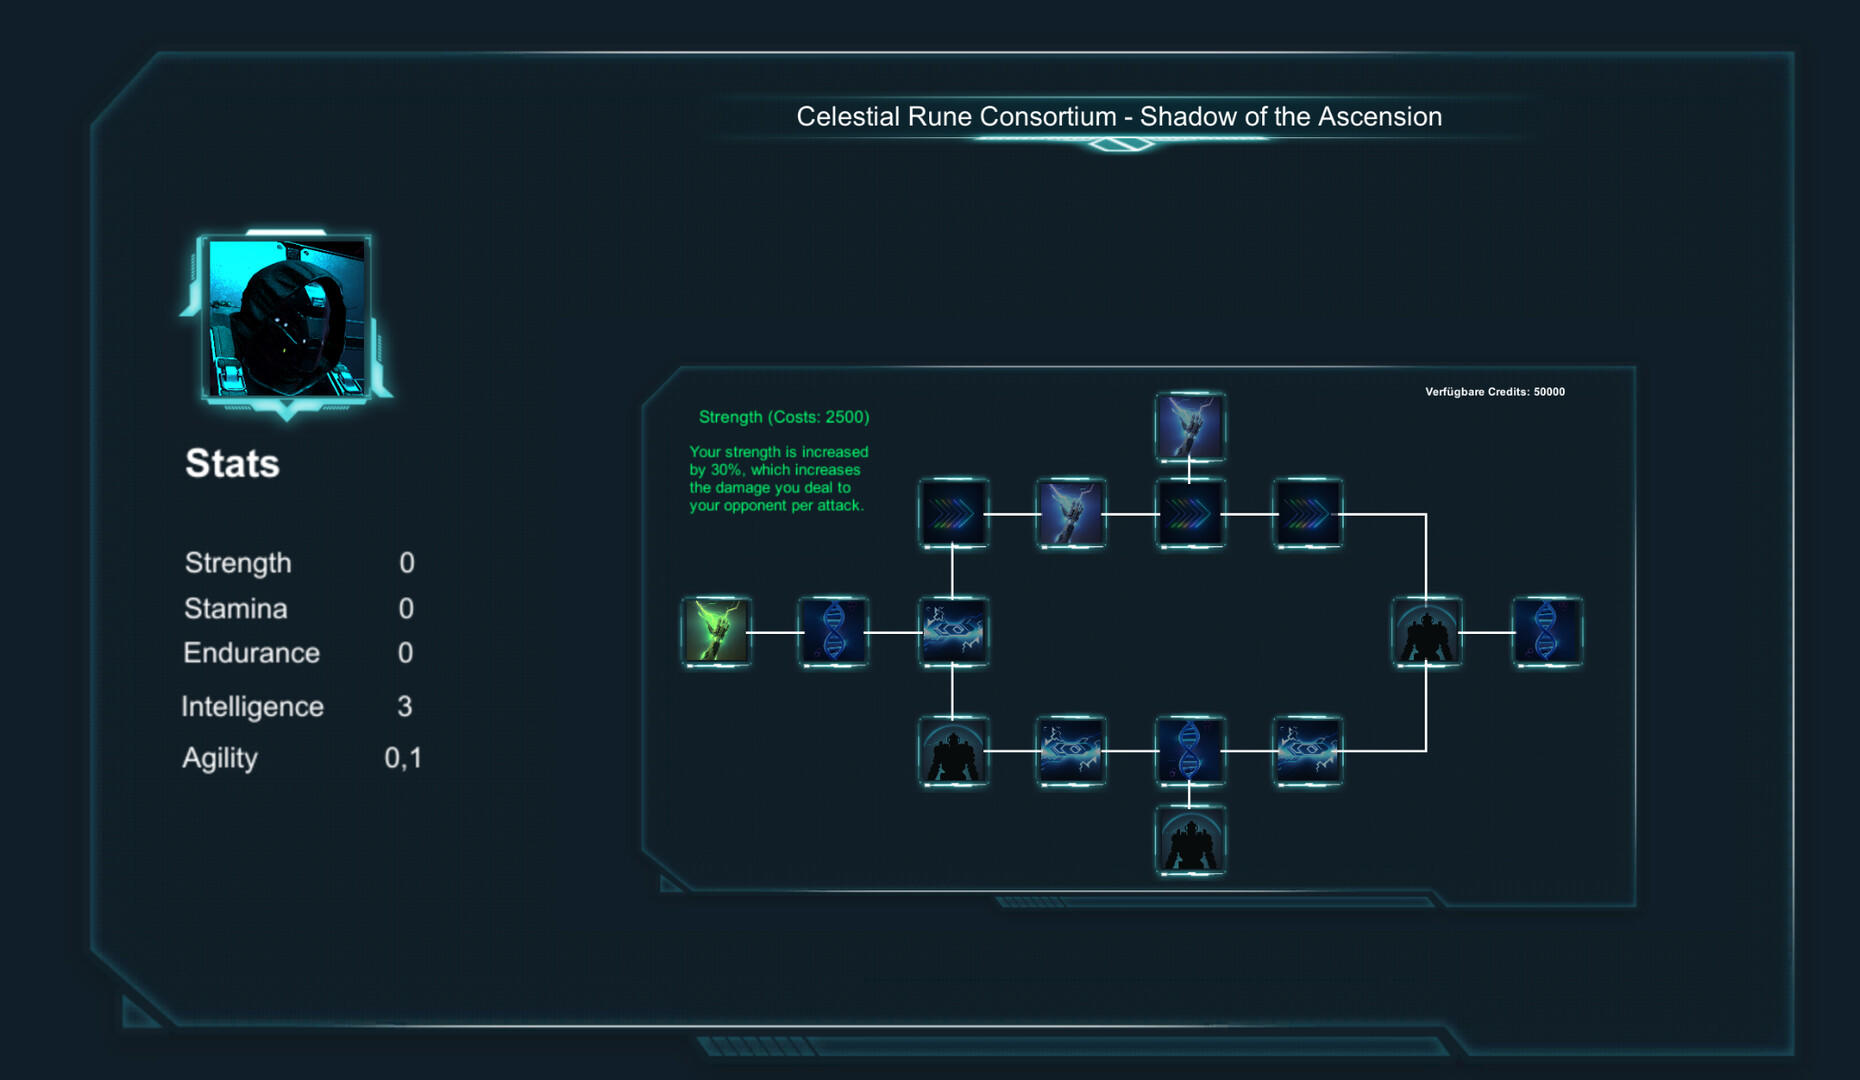 Screenshot of Celestial Rune Consortium: Shadows of Ascension